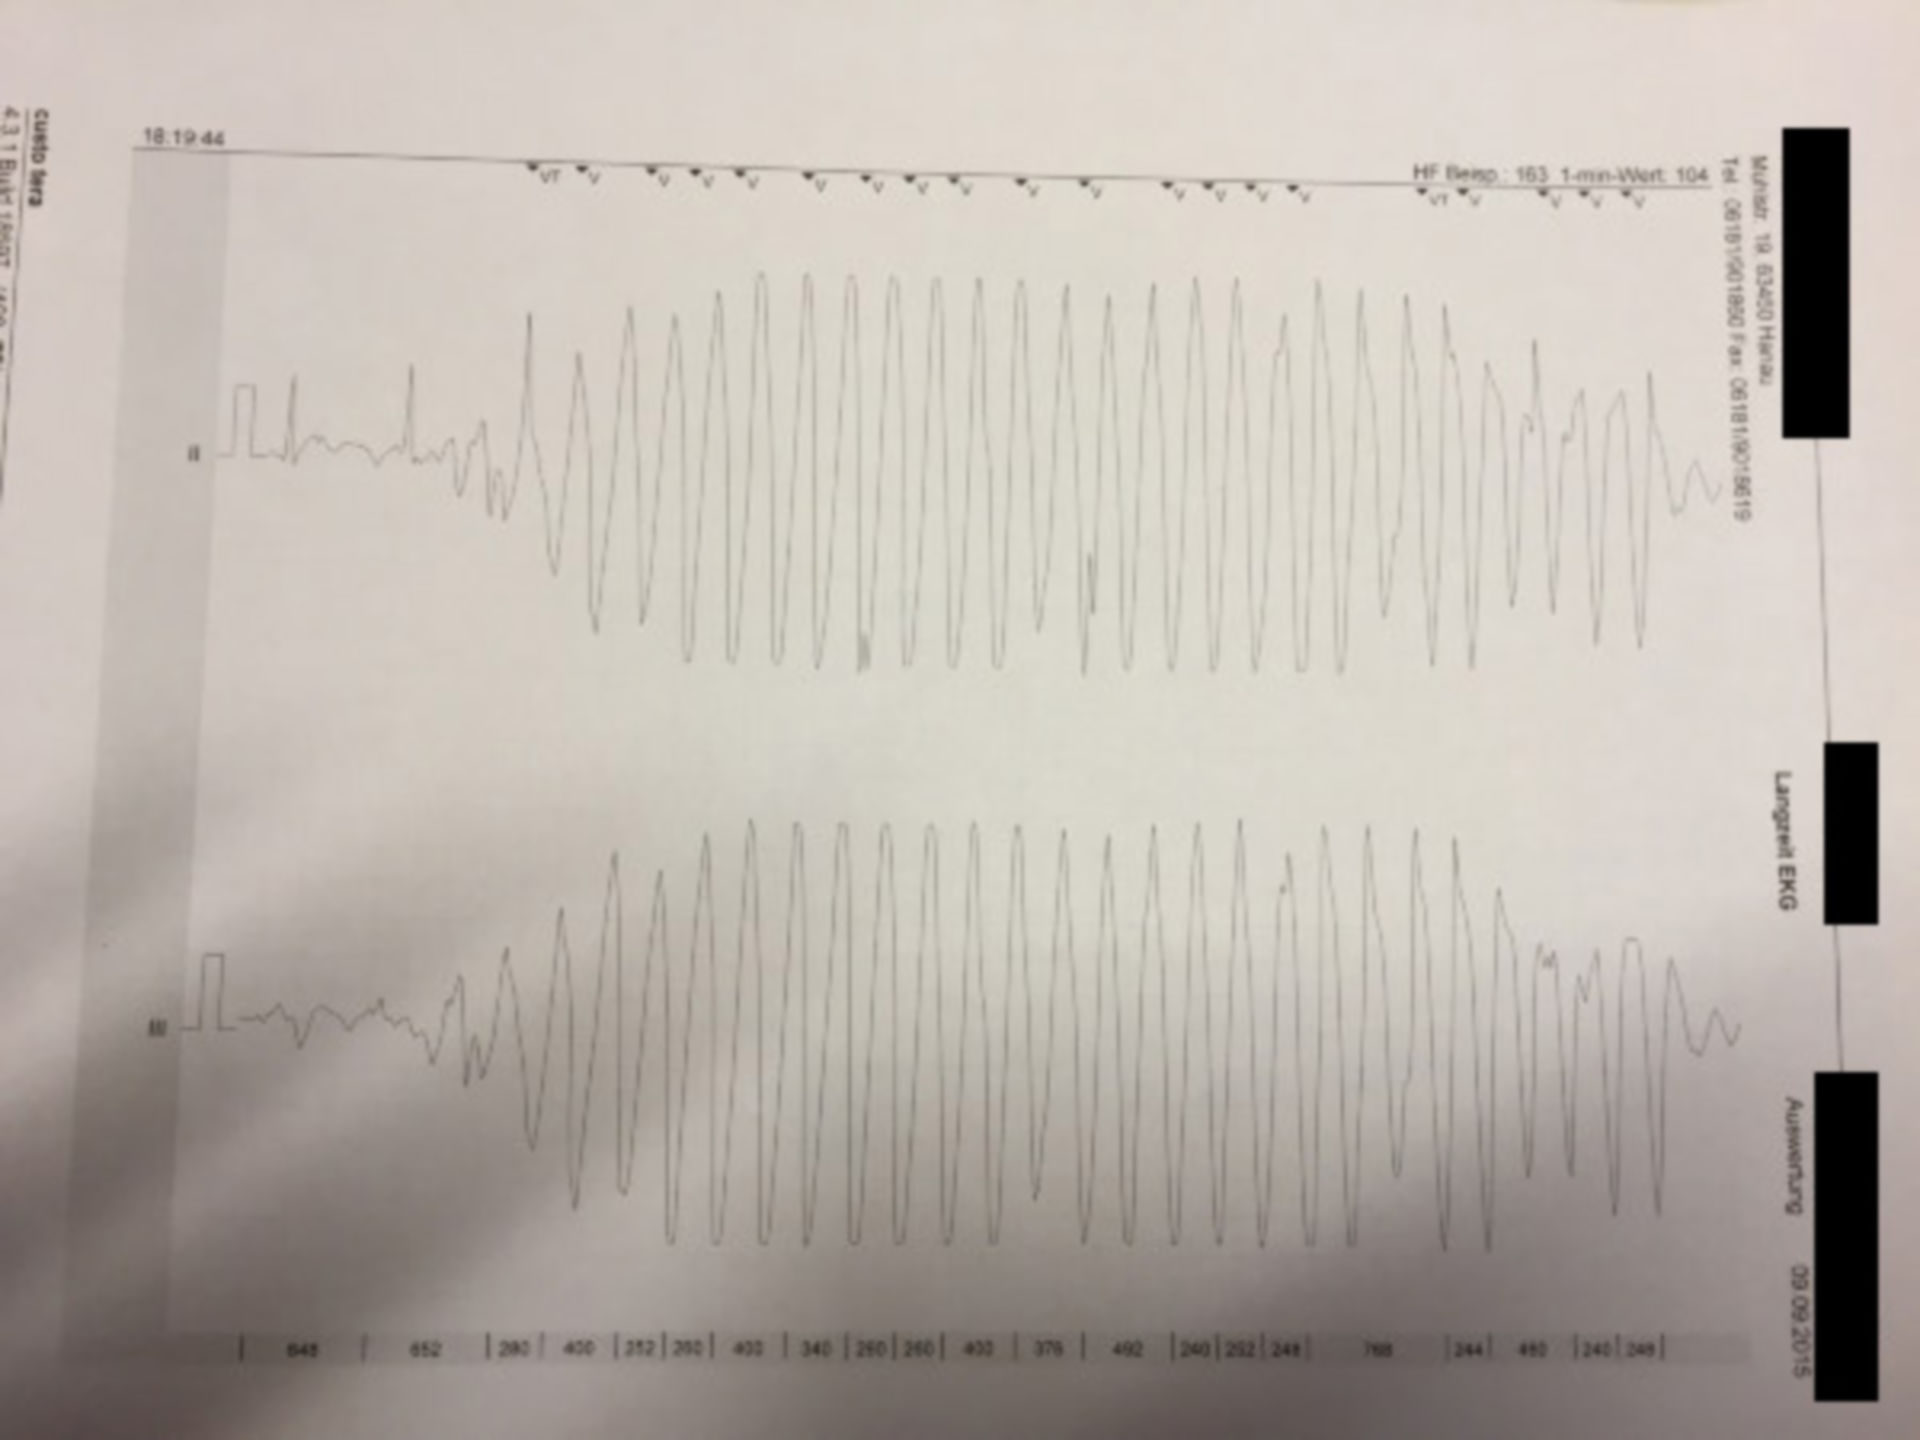 Langzeit-EKG